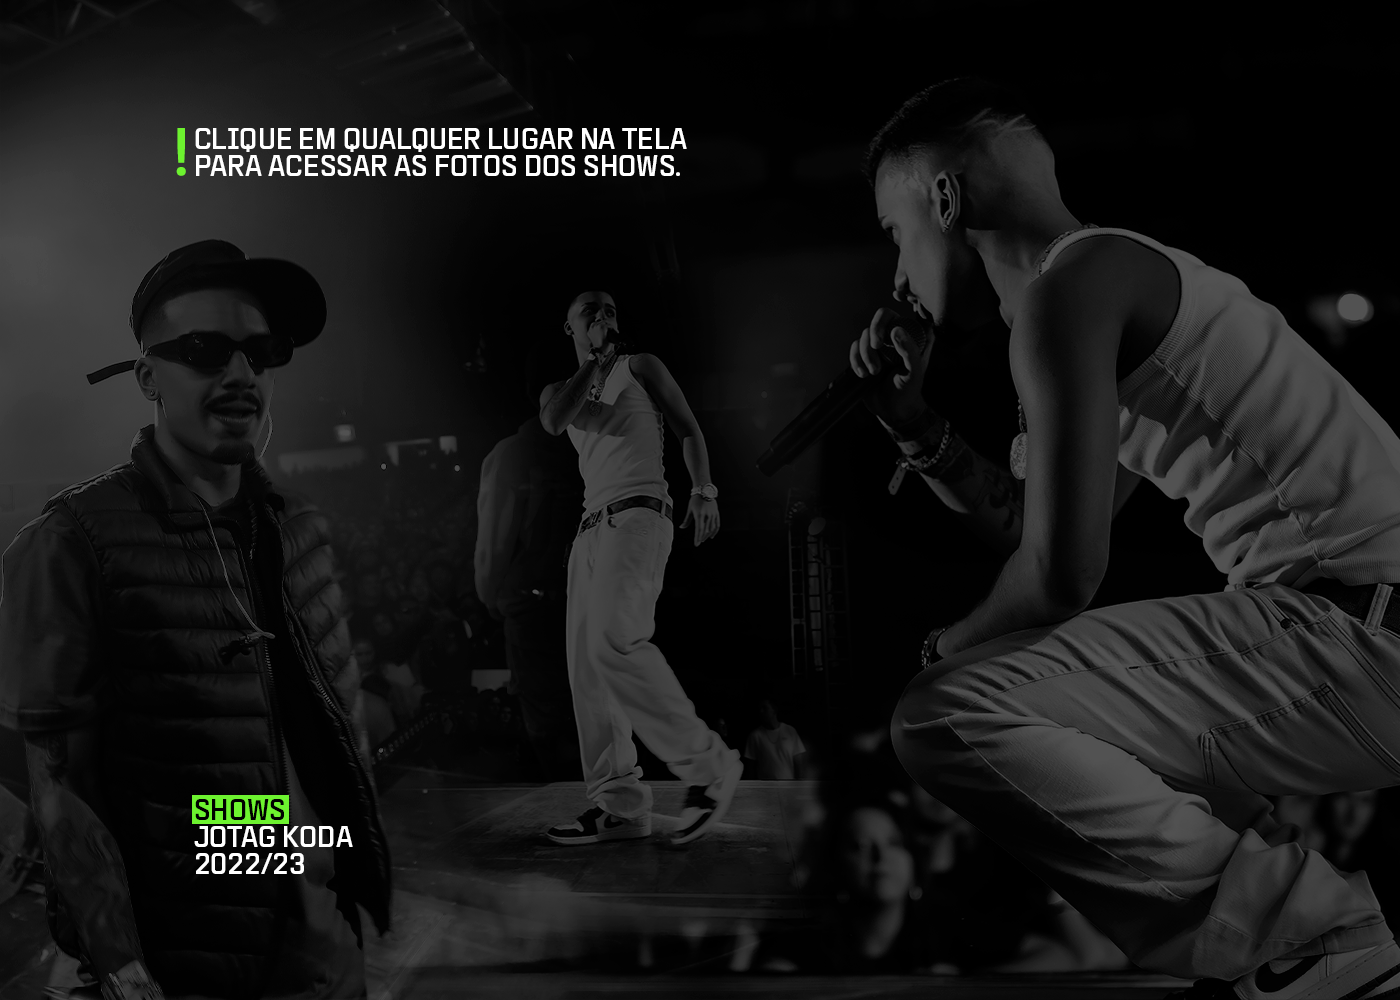 mediakit trap rap hip hop Artista flyer Brasil presskit jotag koda